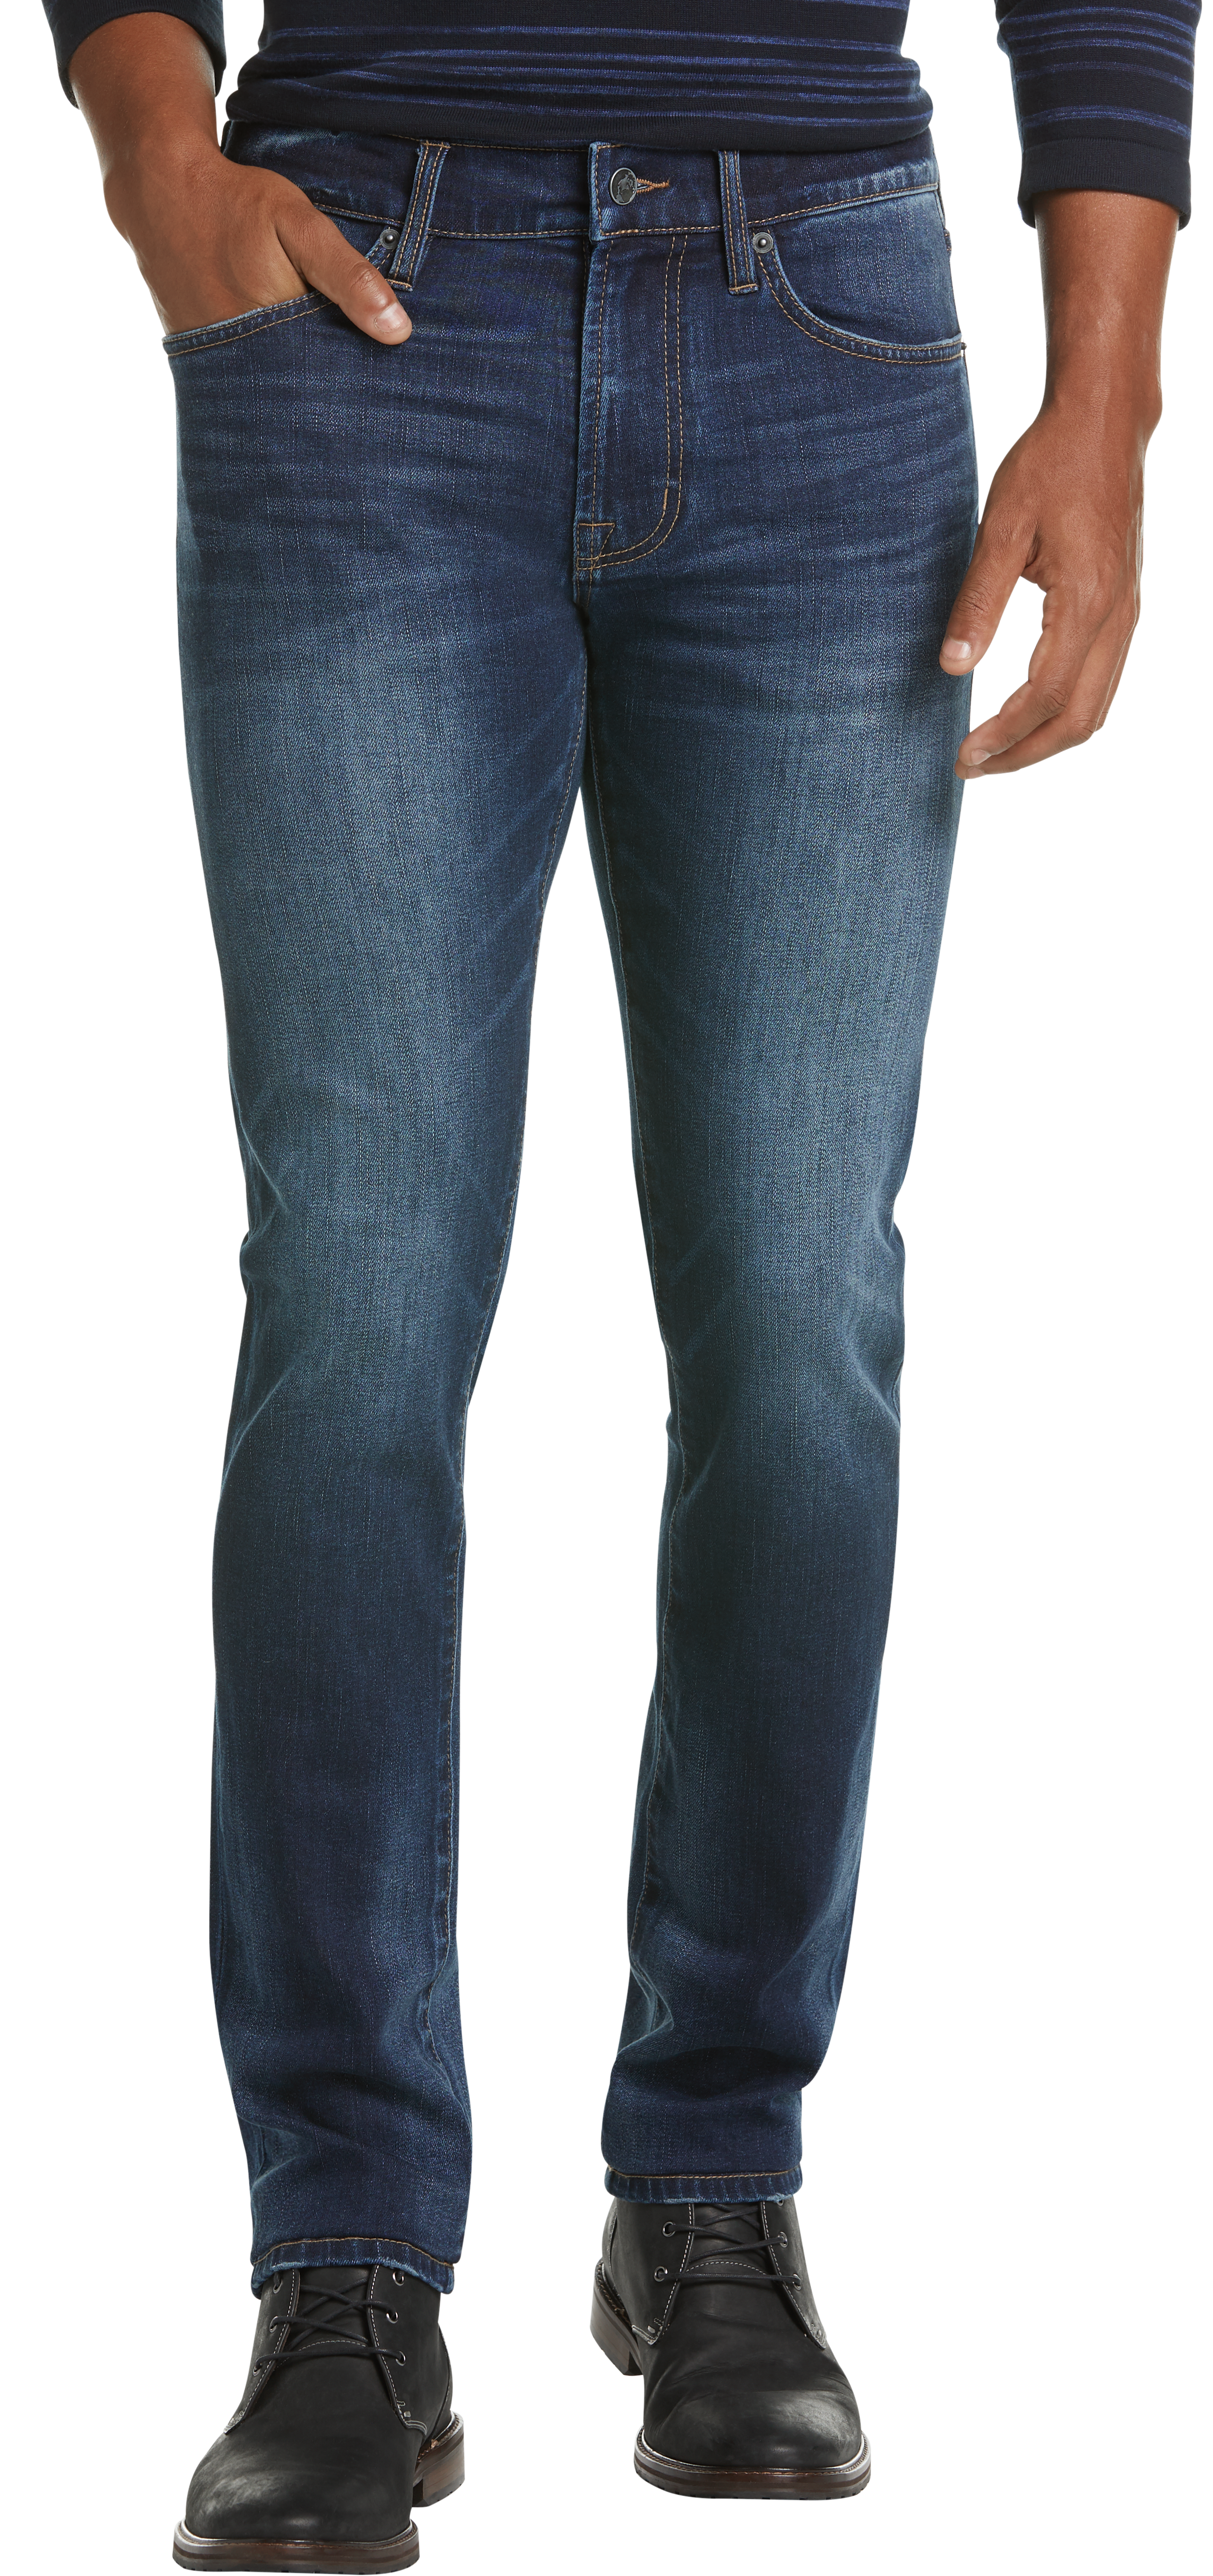 JOE Joseph Abboud Midnight Dark Wash Slim Fit Jeans - Men's Pants | Men ...